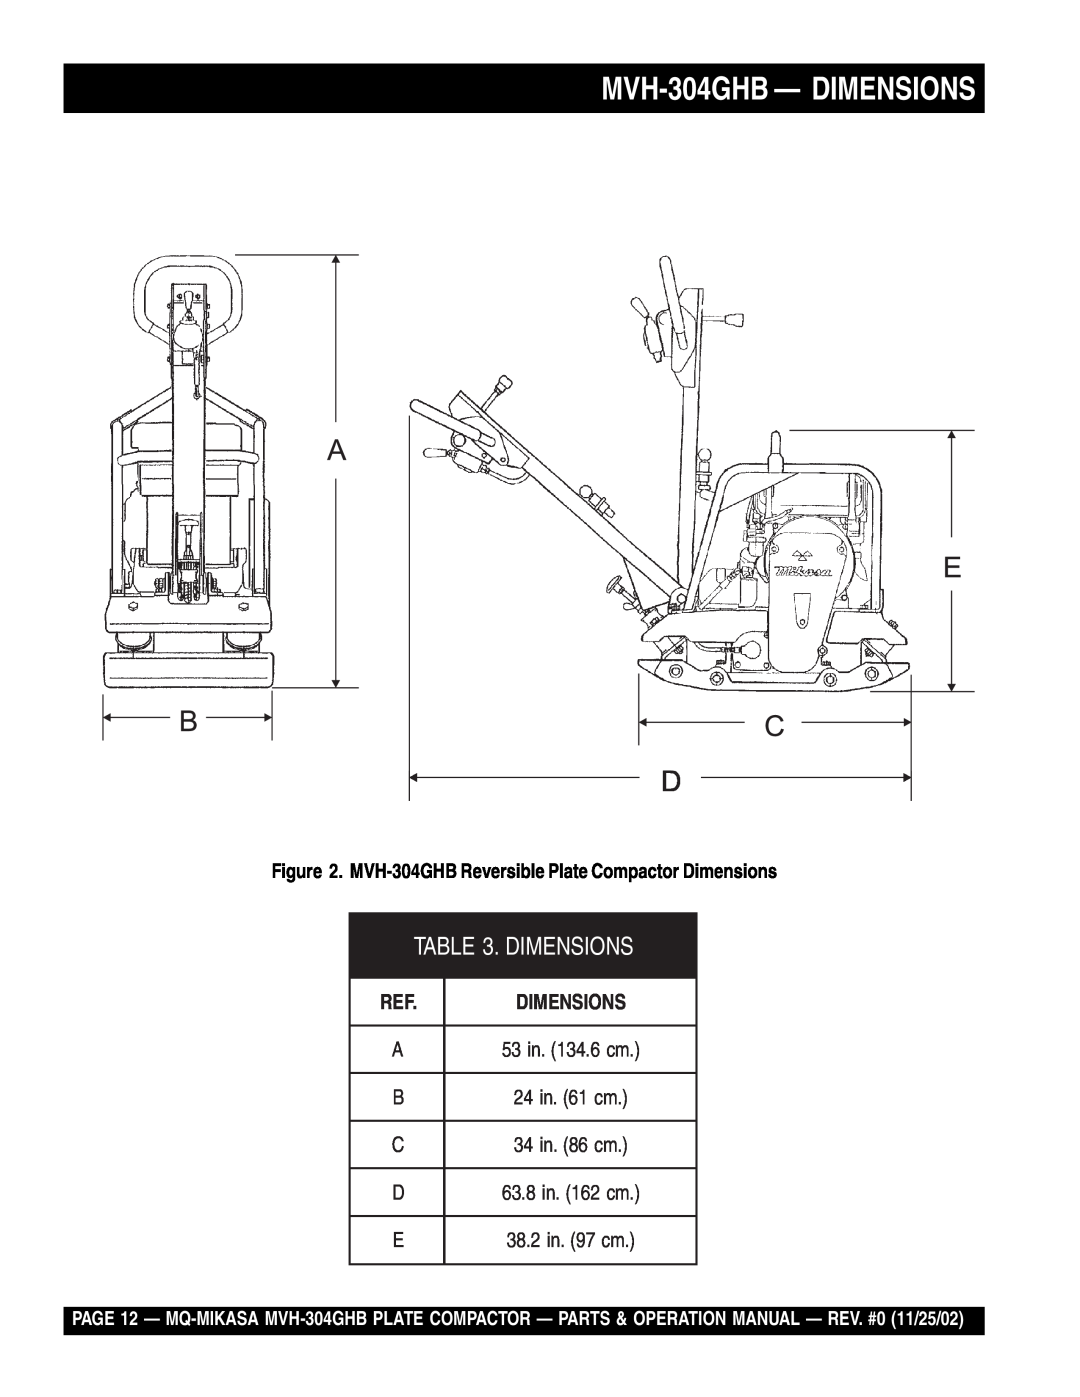 Multiquip operation manual MVH-304GHB- DIMENSIONS, Dimensions 